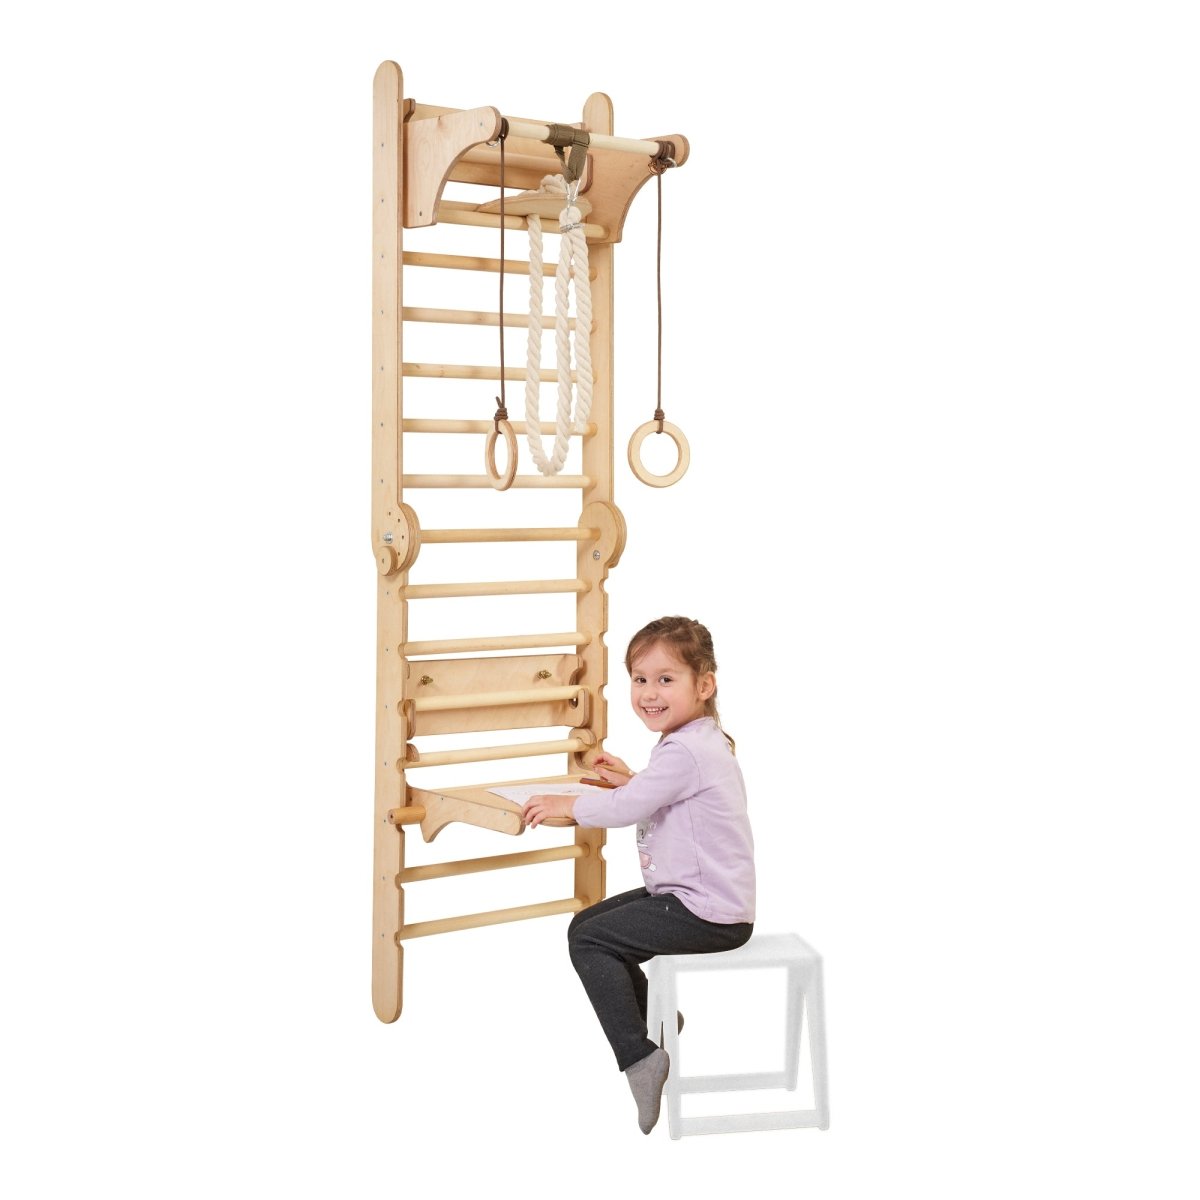 5in1: Wooden Swedish Wall / Climbing ladder for Children + Swing Set + Slide Board + Art Add-on - Goodevas